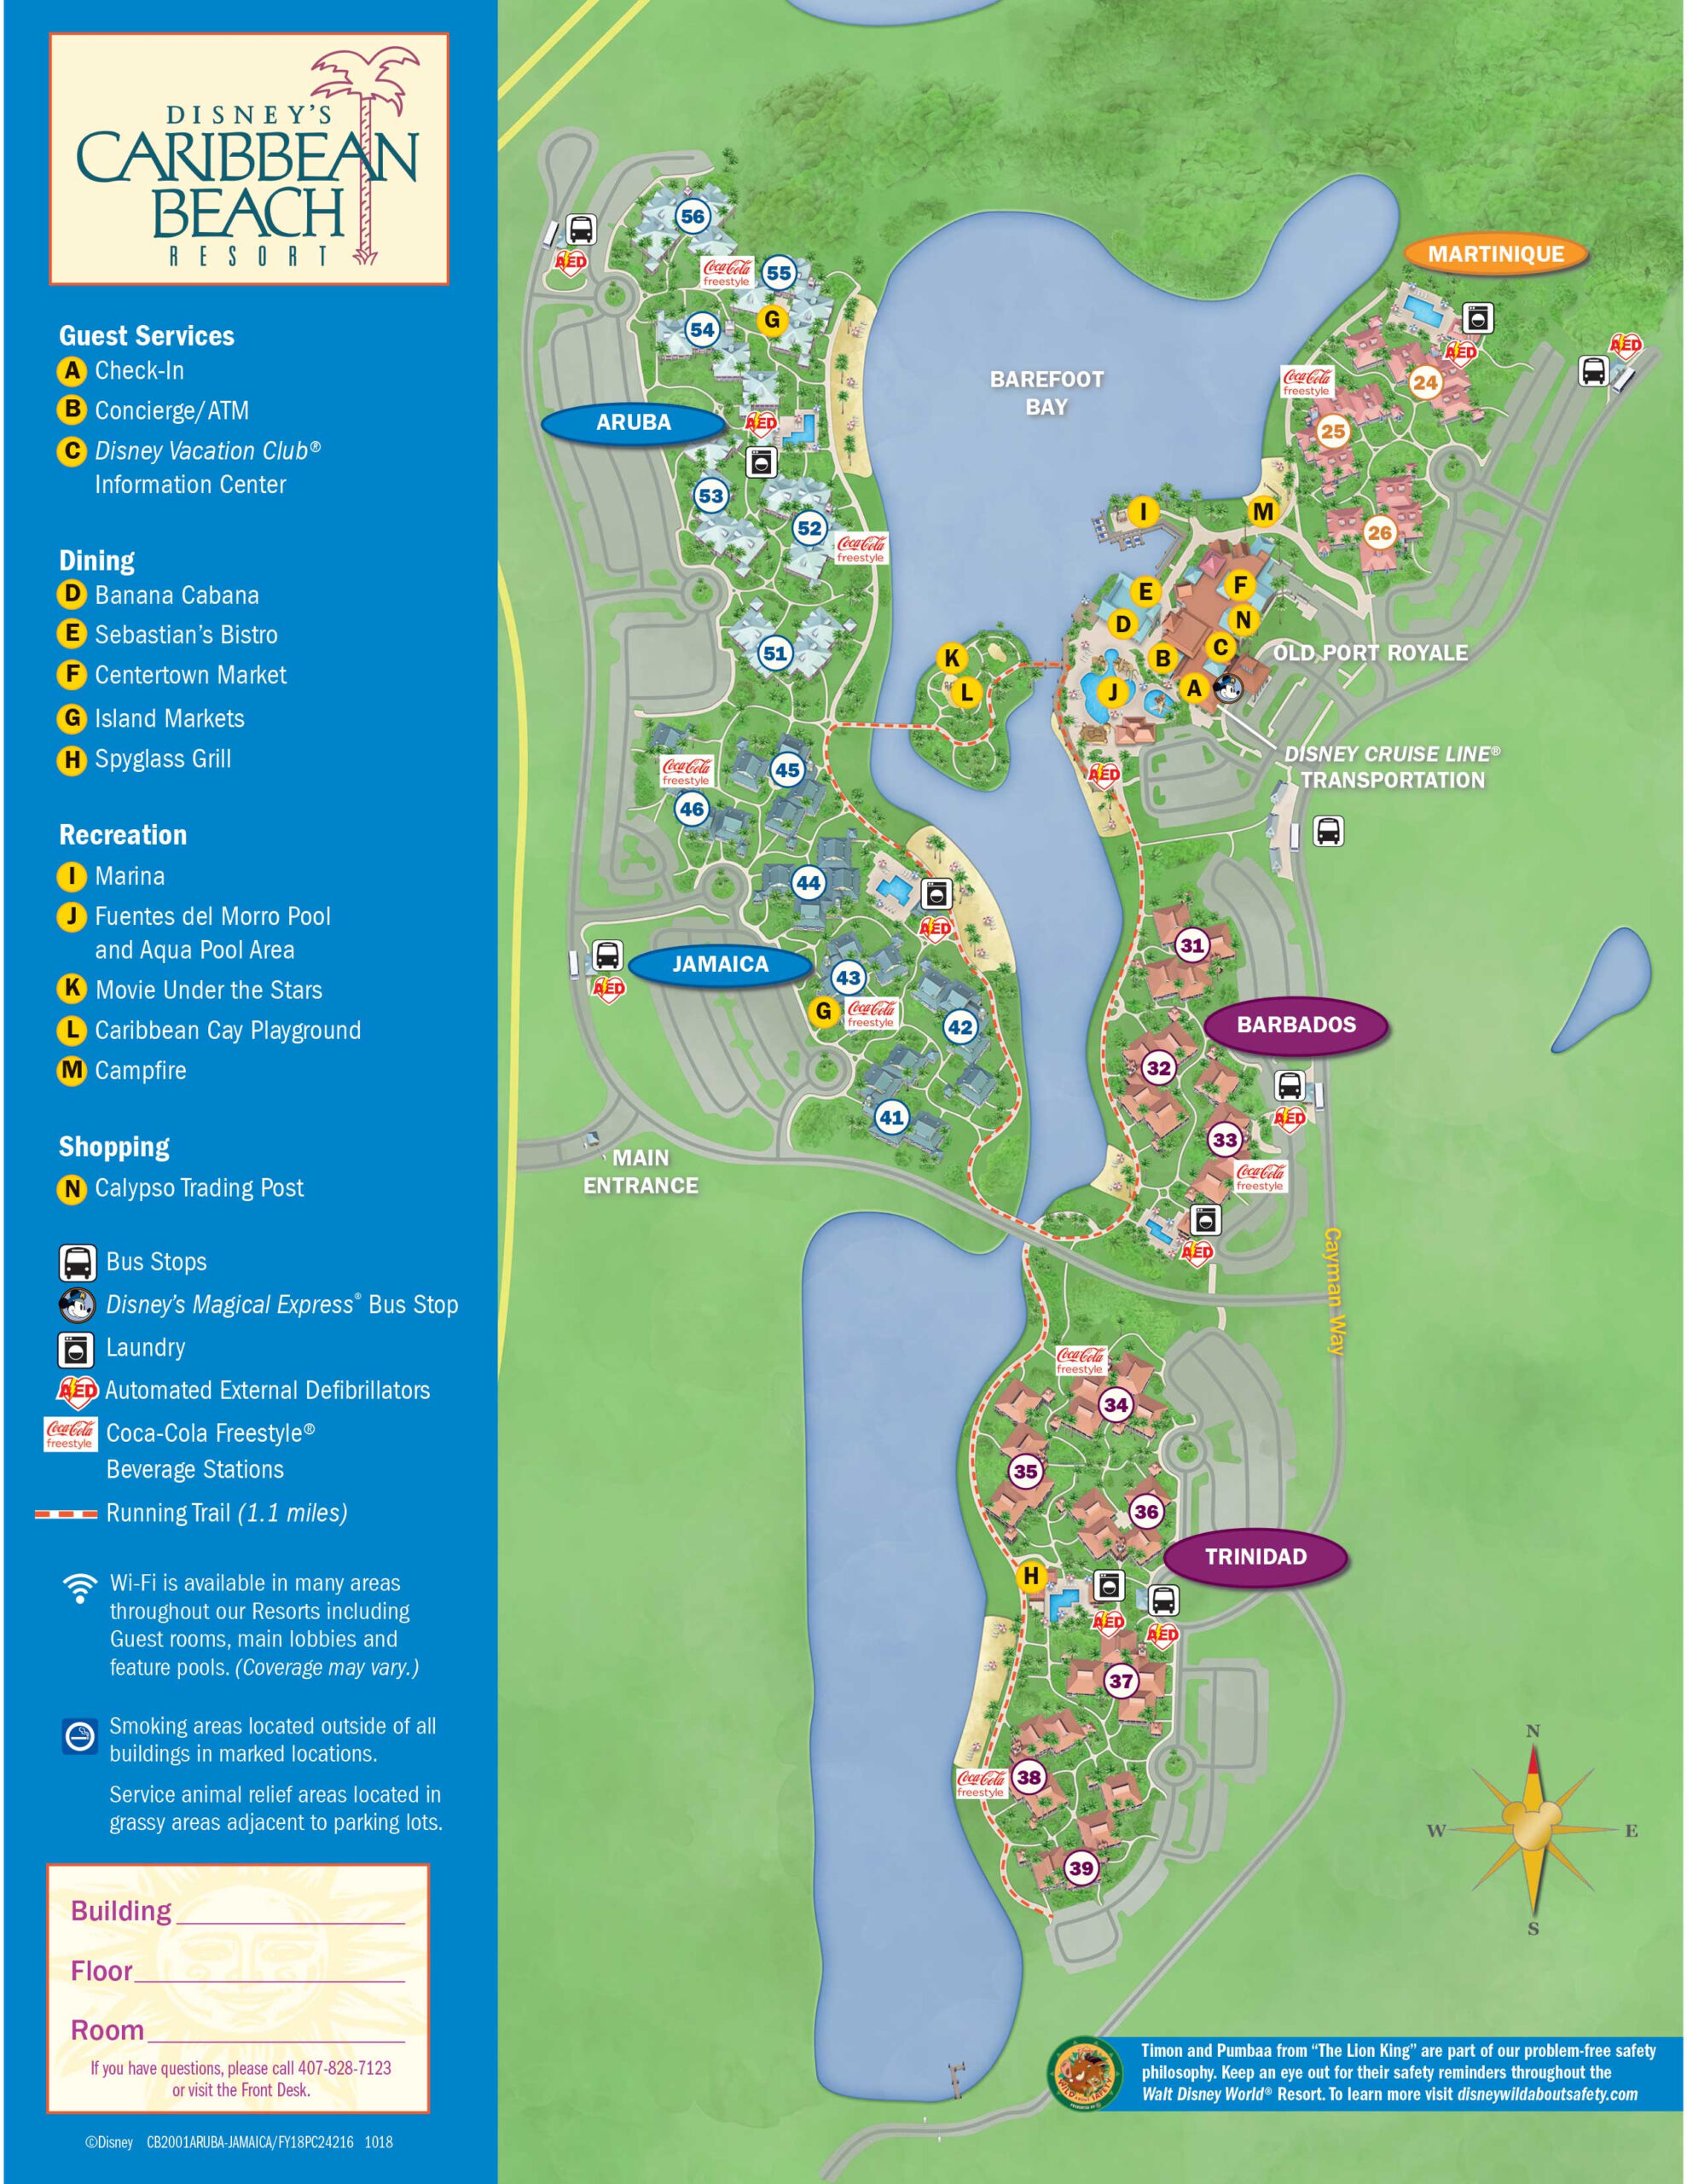 PHOTOS New Guide Map For Disney s Caribbean Beach Resort